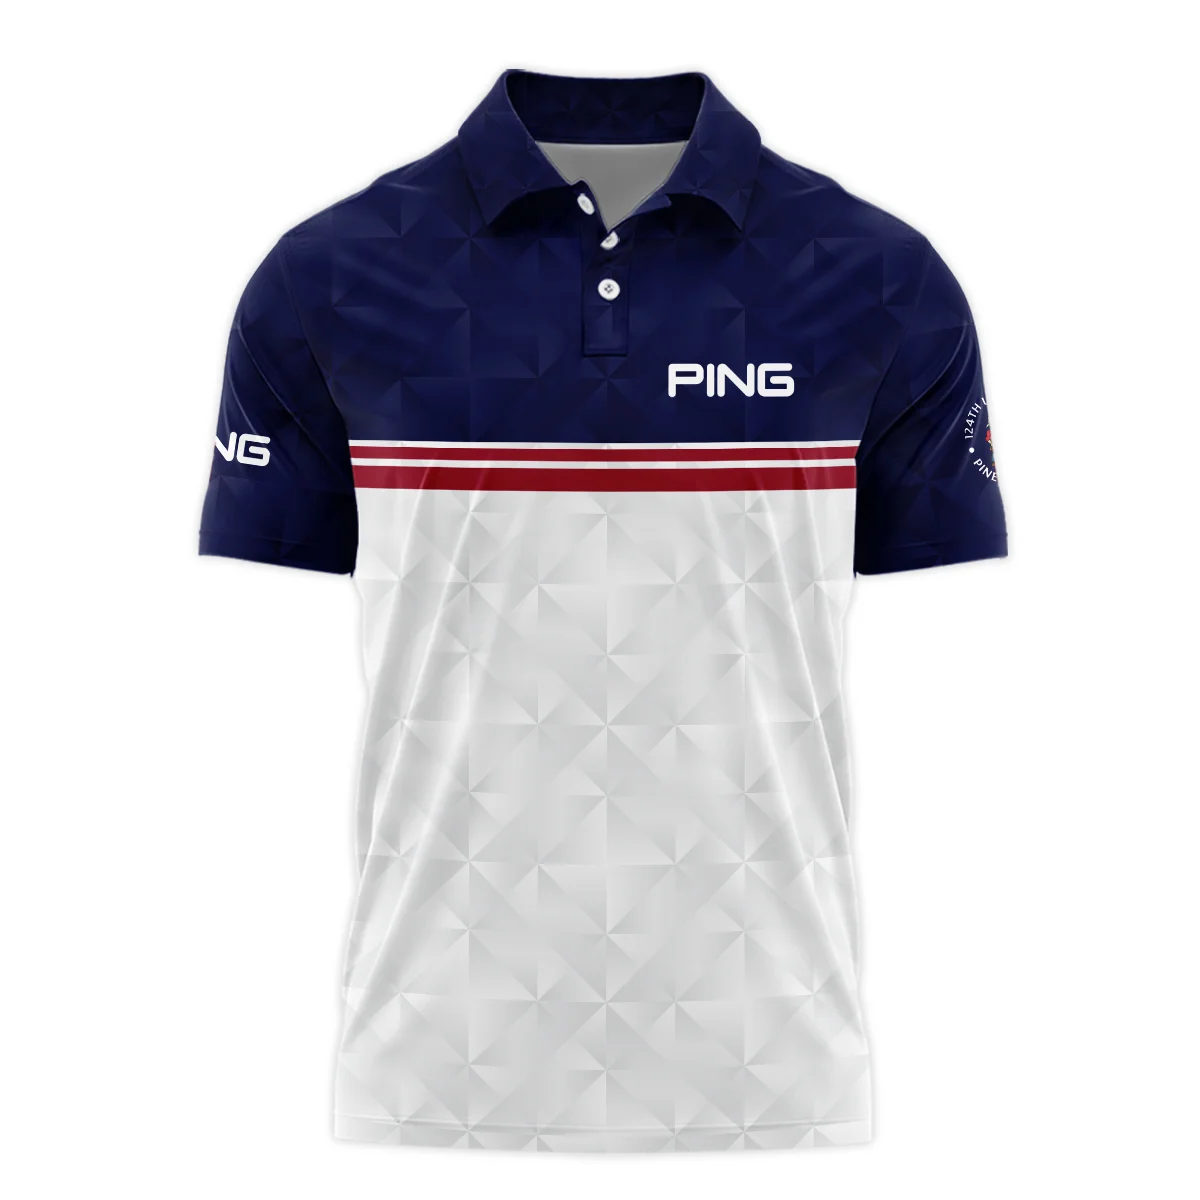 Golf Sport 124th U.S. Open Pinehurst Ping Polo Shirt Dark Blue White Abstract Geometric Triangles All Over Print Polo Shirt For Men